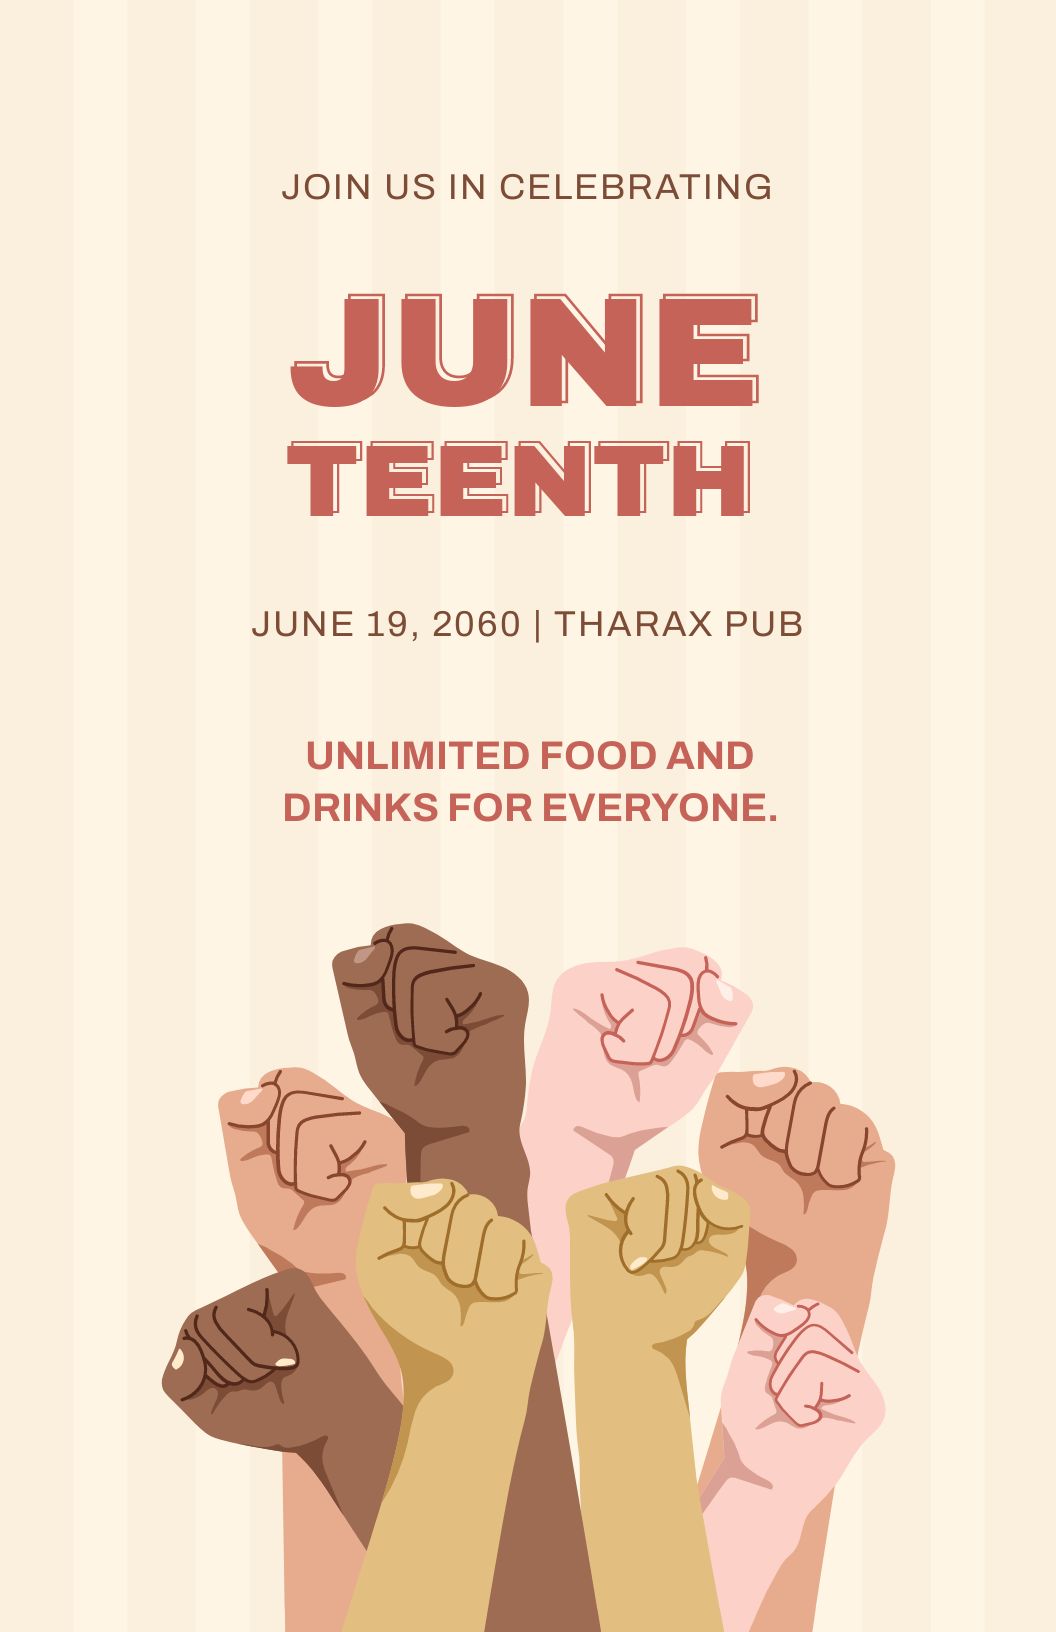 Free Juneteenth Celebration Poster in Word, Google Docs, Illustrator, PSD, Apple Pages, Publisher, JPG